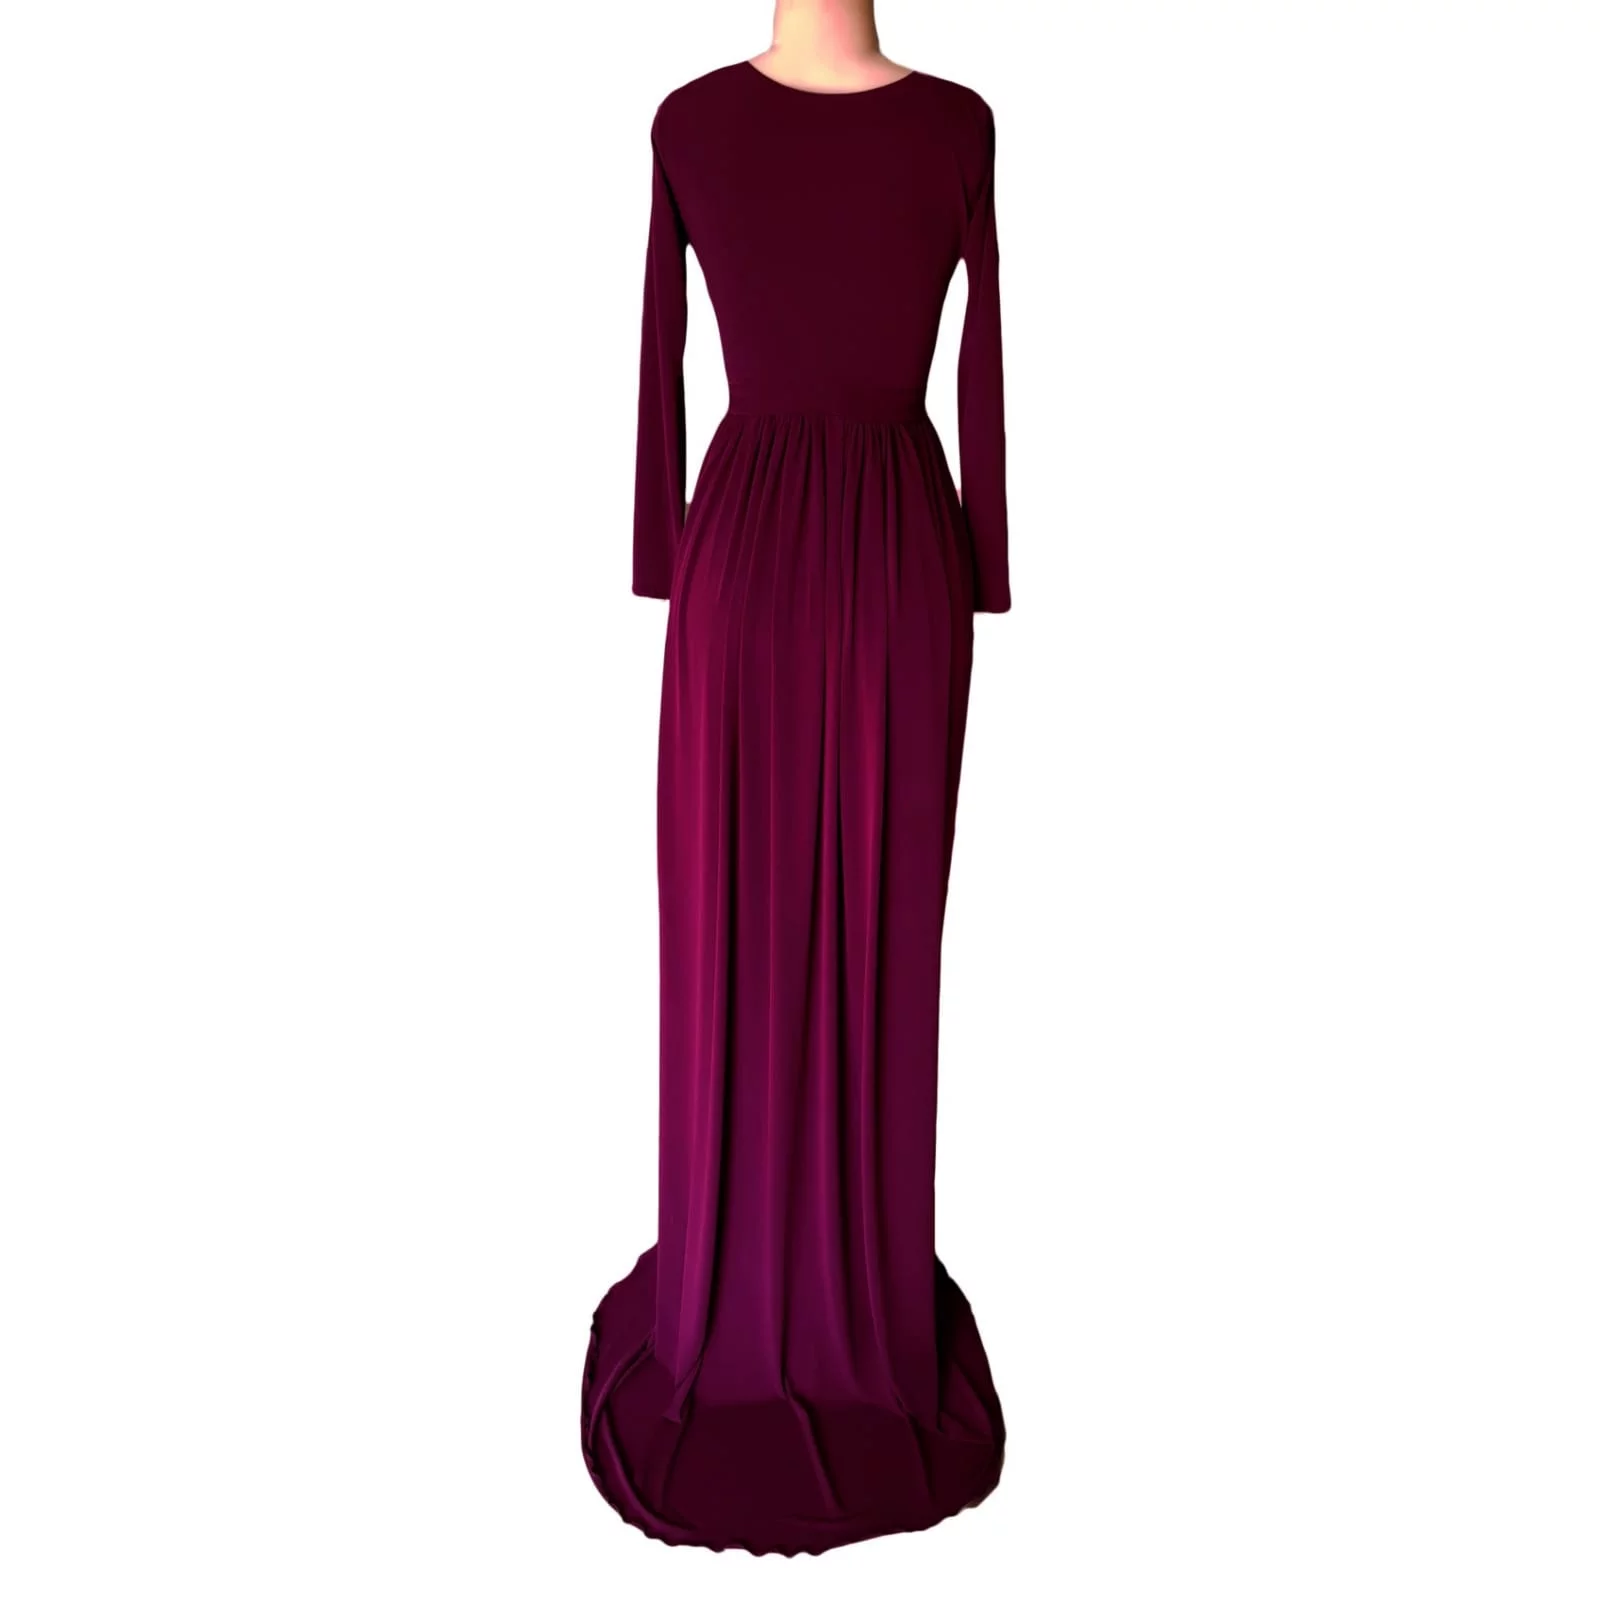 Plum Flowy Plunging Neckline Prom Dress - Marisela Veludo - Fashion Designer